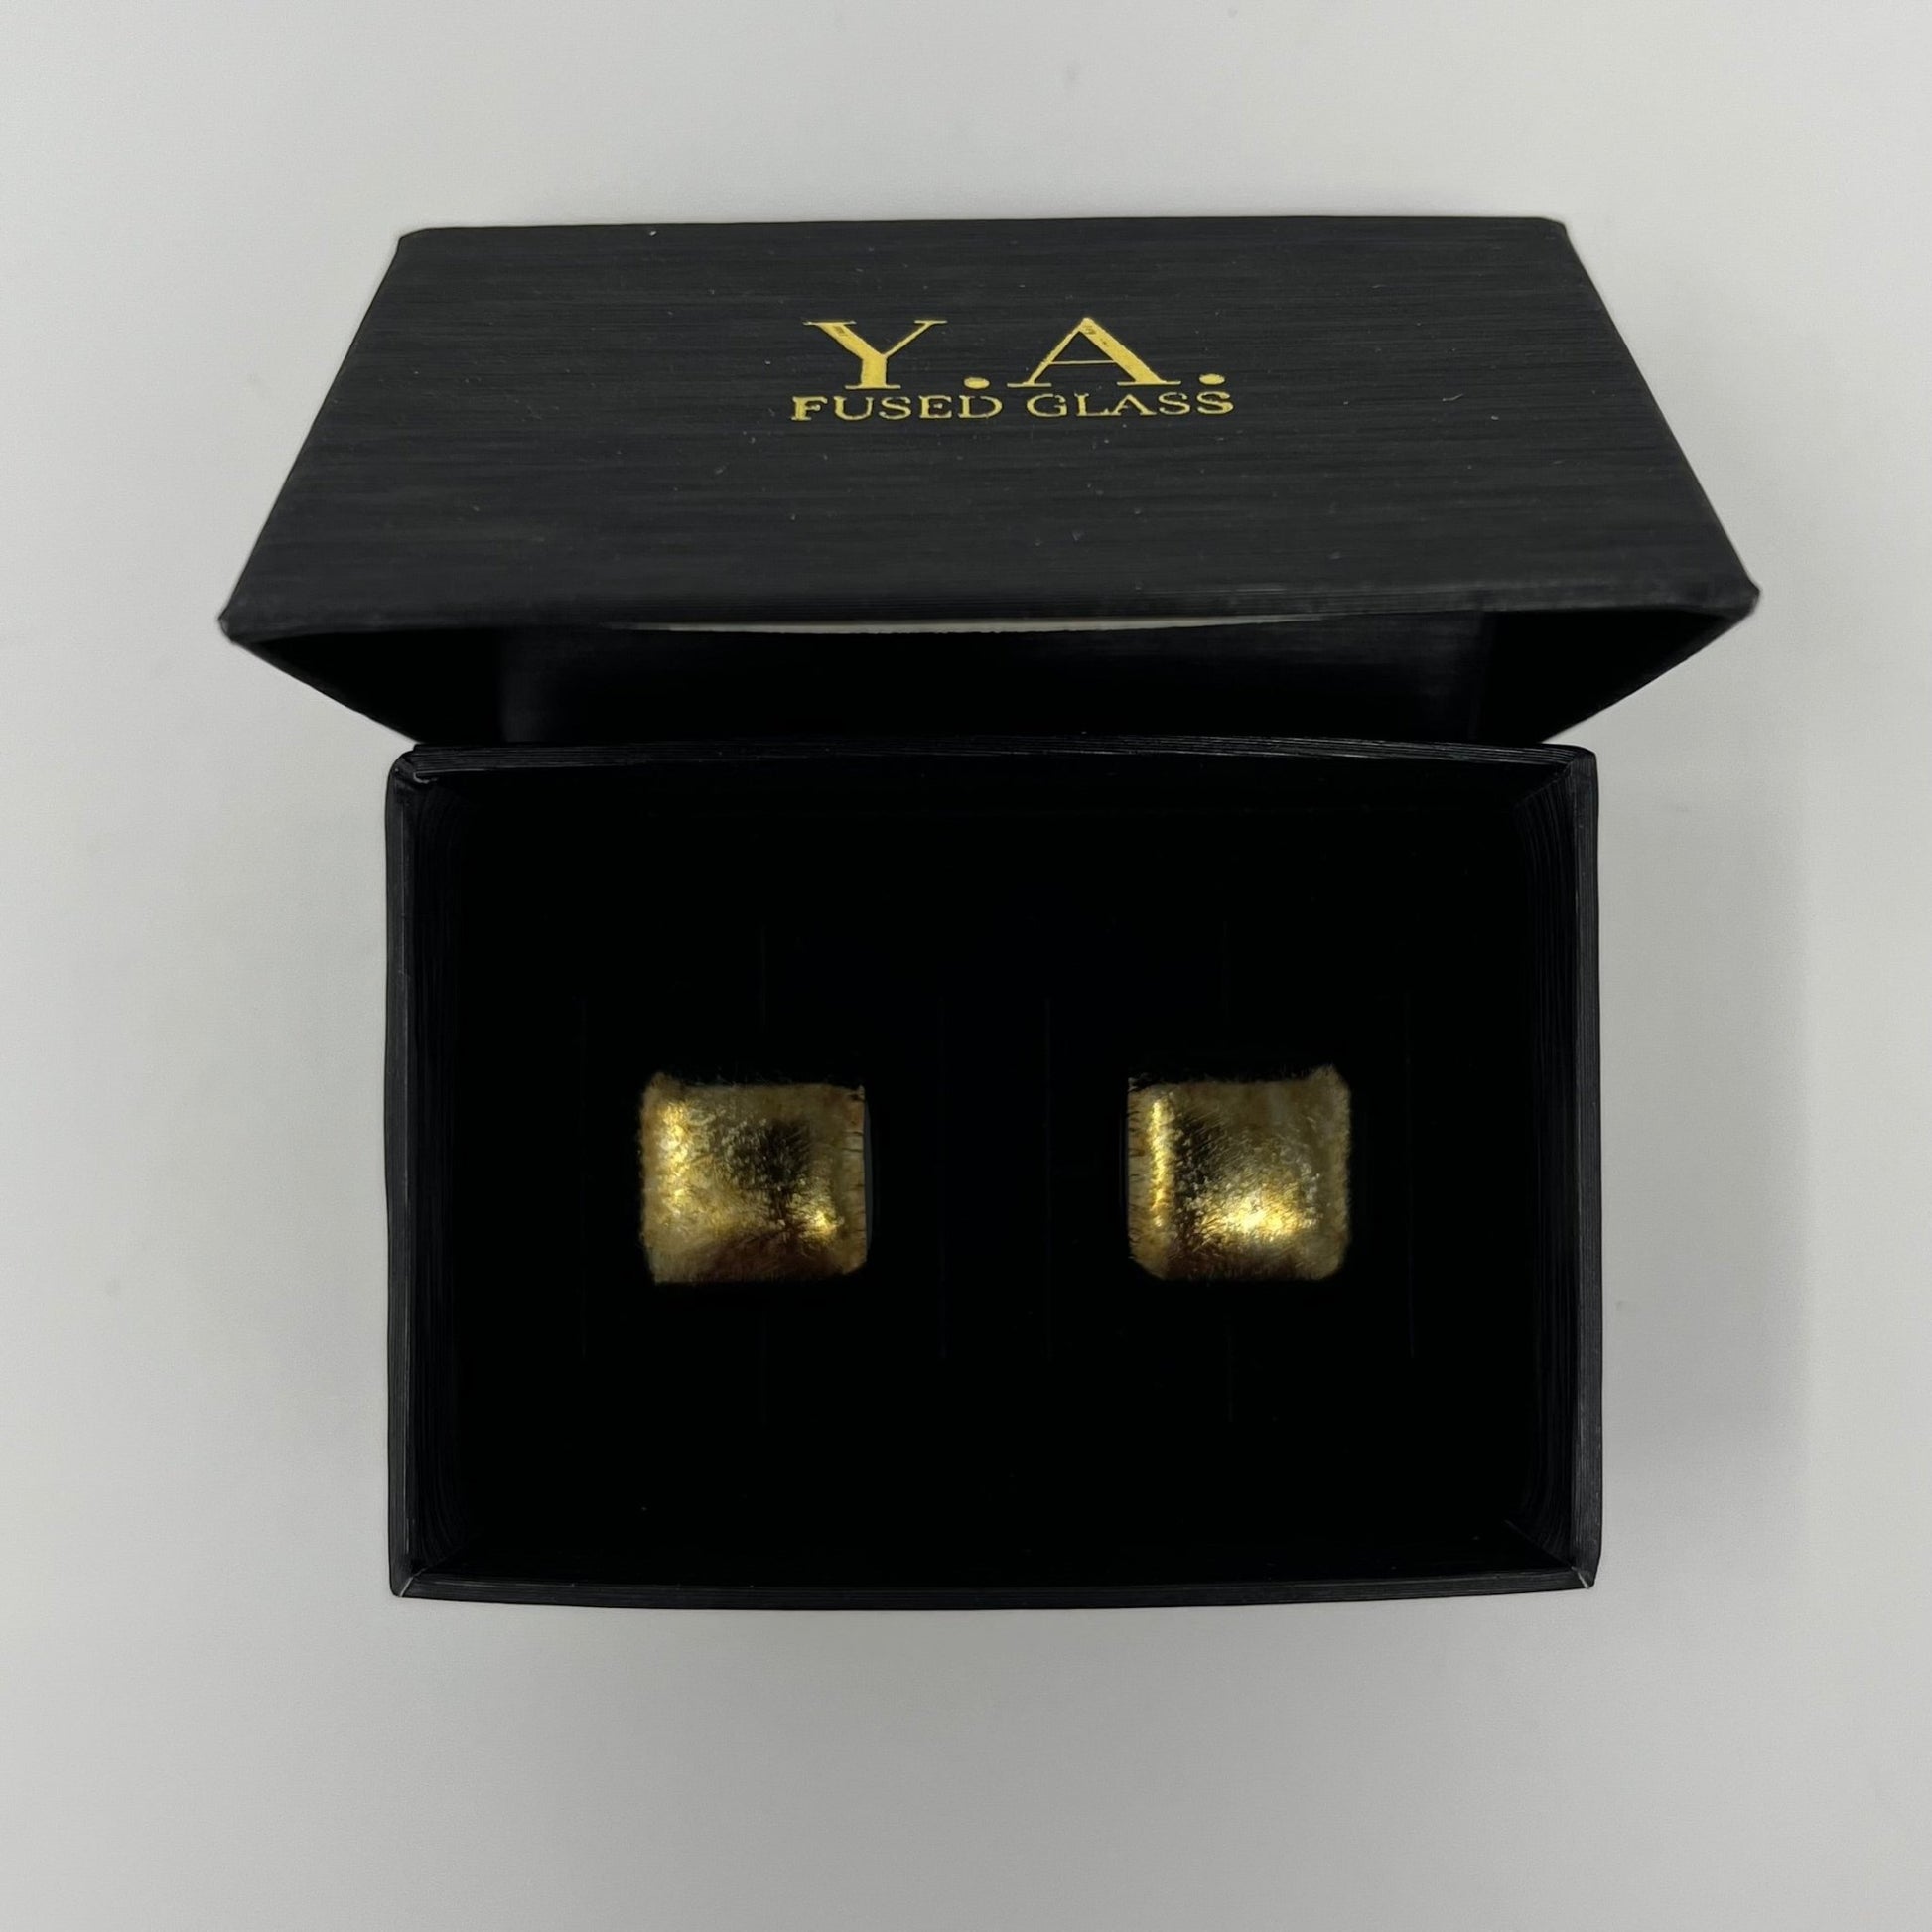 Copper Gold Cufflinks - Y.A. Fused Glass -